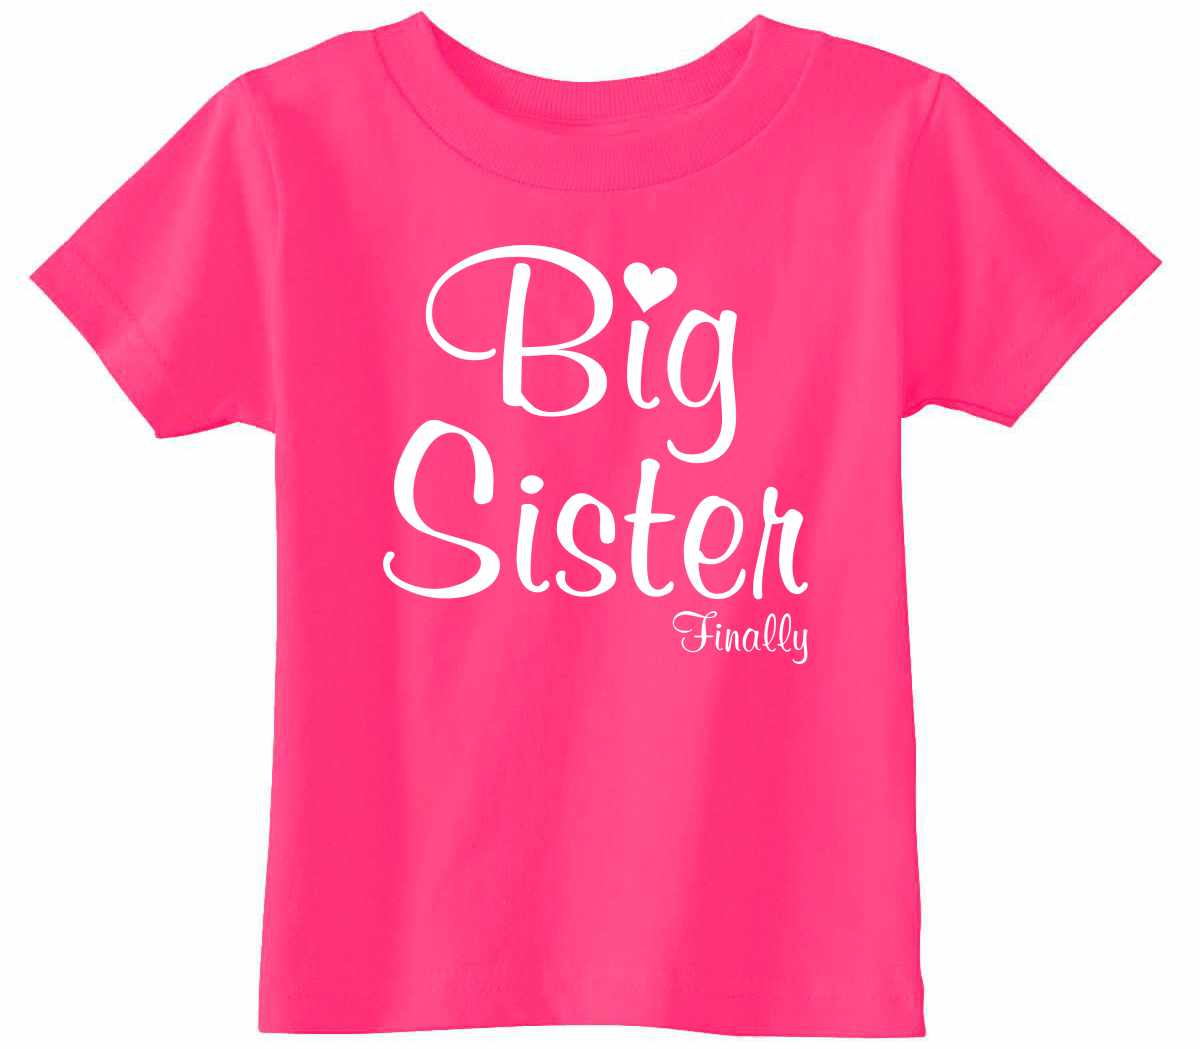 Big Sister Finally on Infant-Toddler T-Shirt (#1263-7)